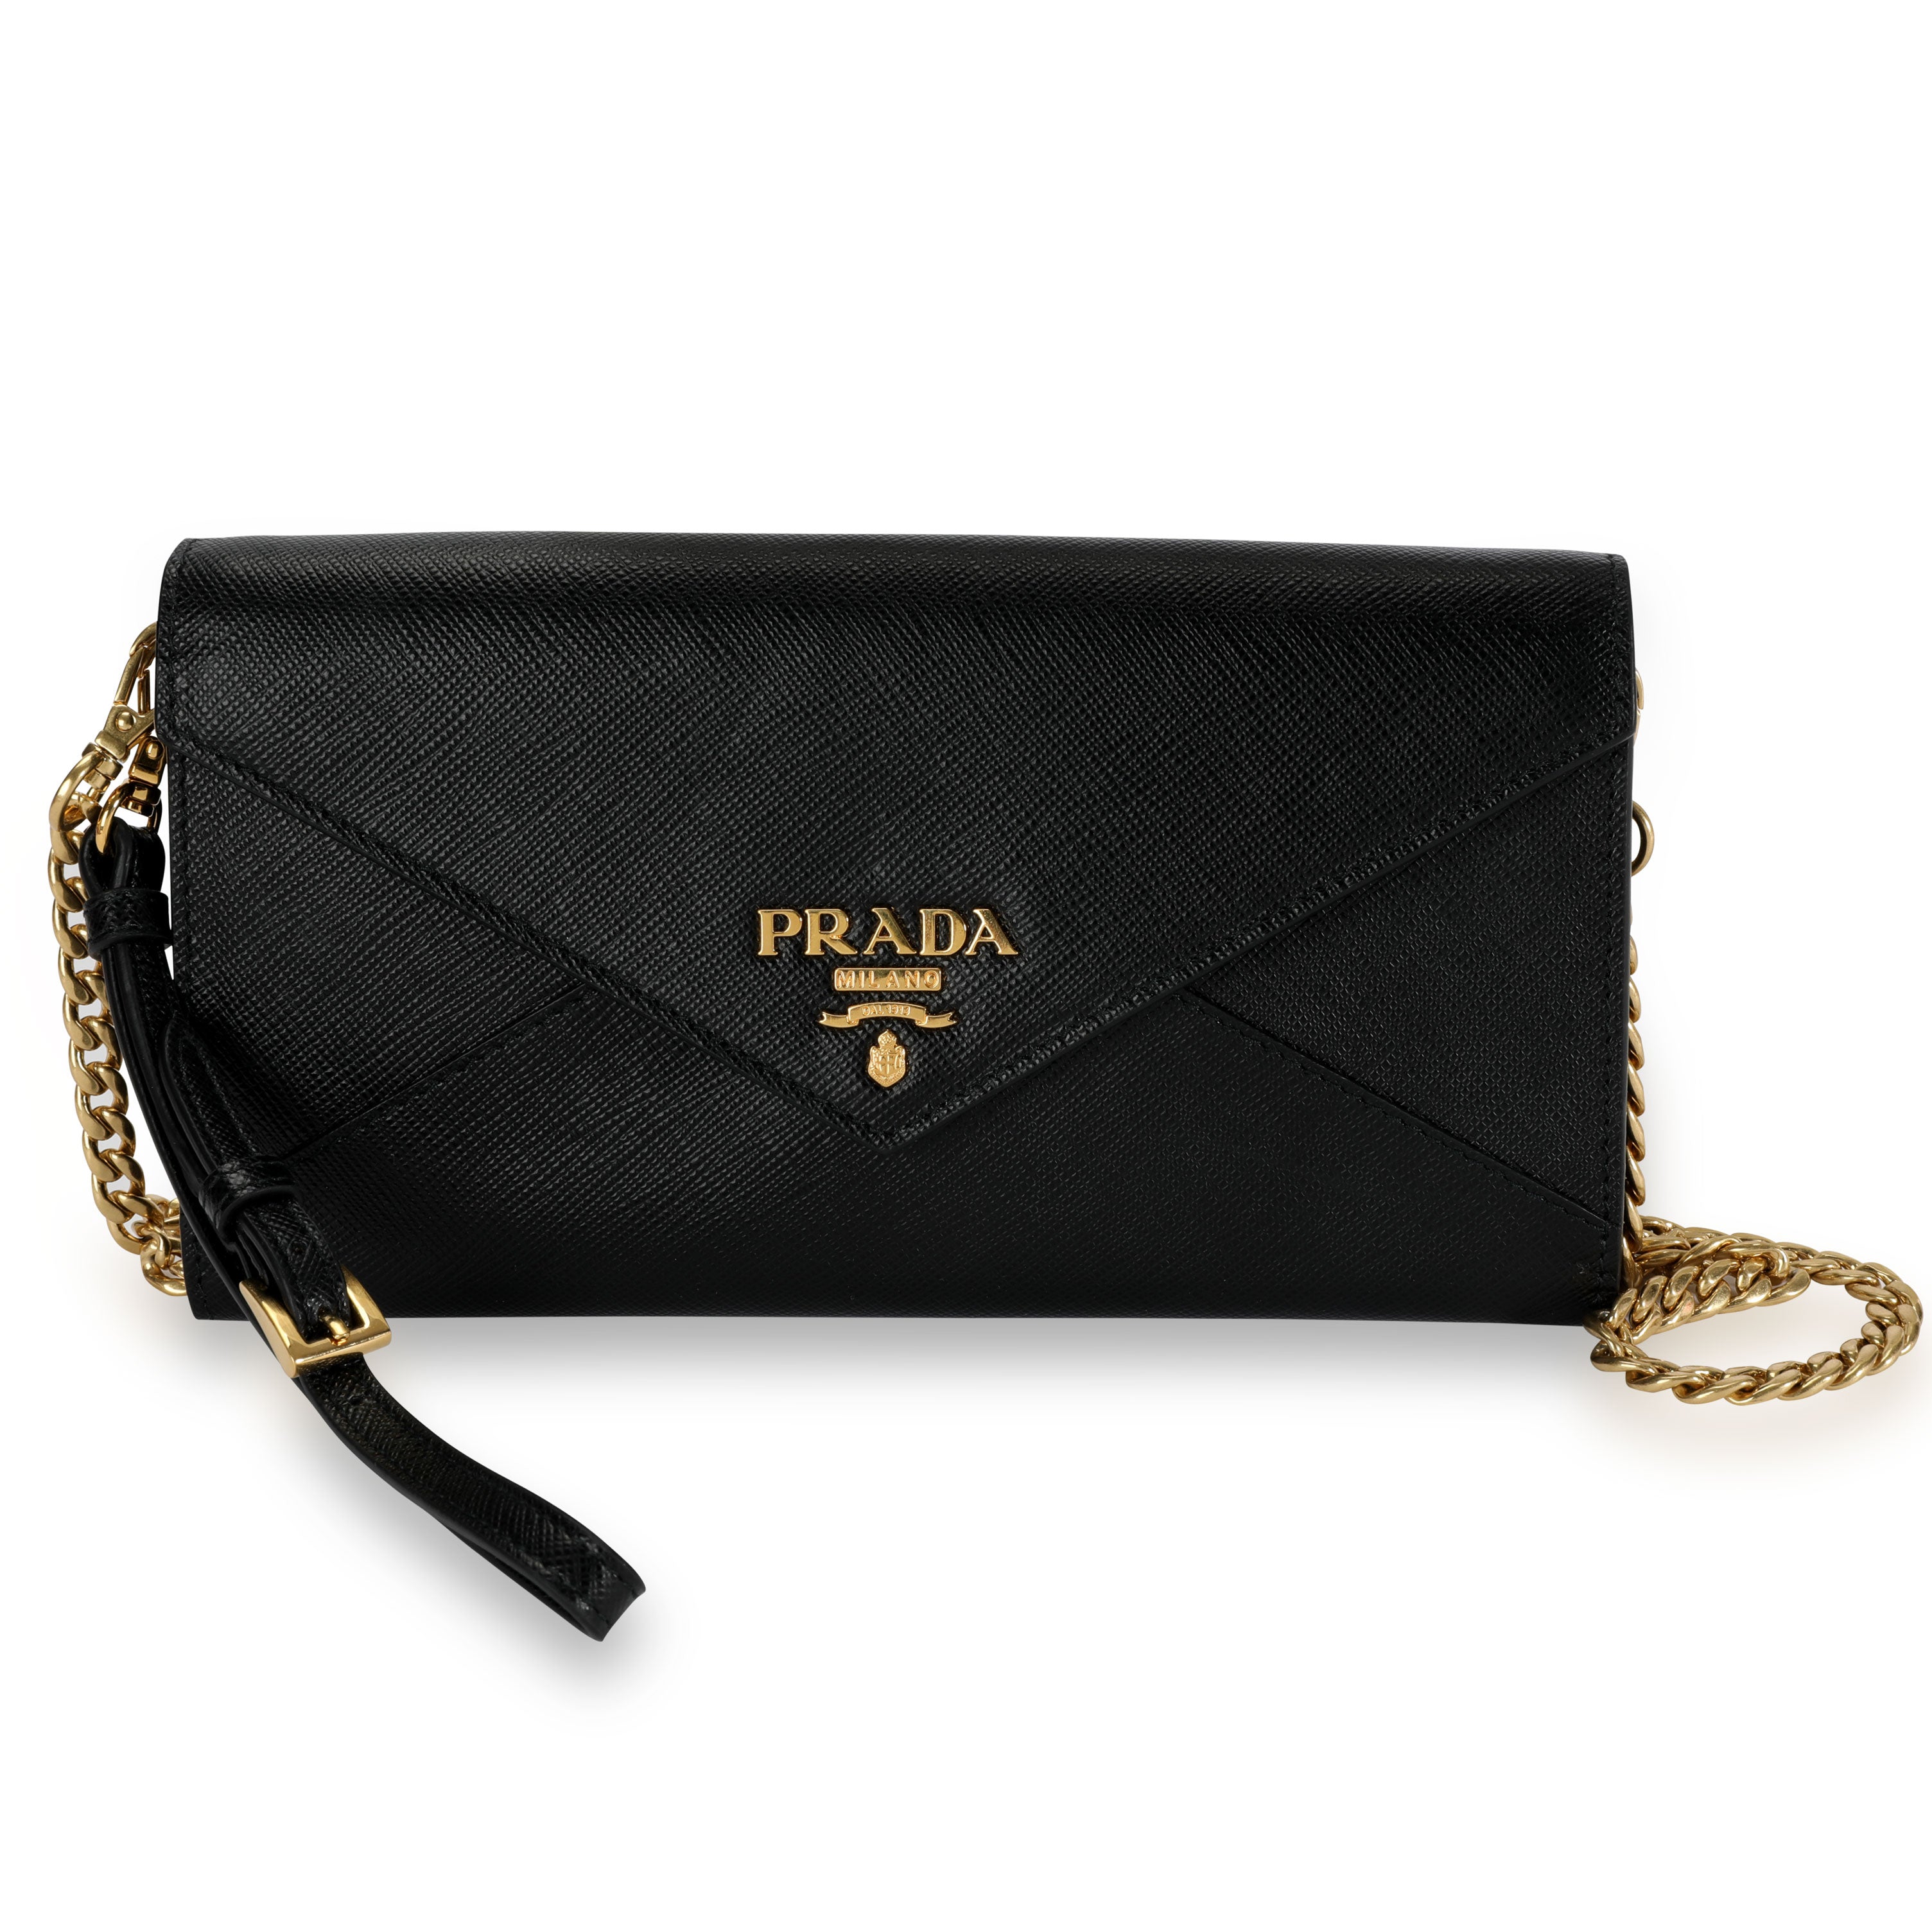 new PRADA pink diamond envelop gold logo wallet on chain crossbody clutch  bag